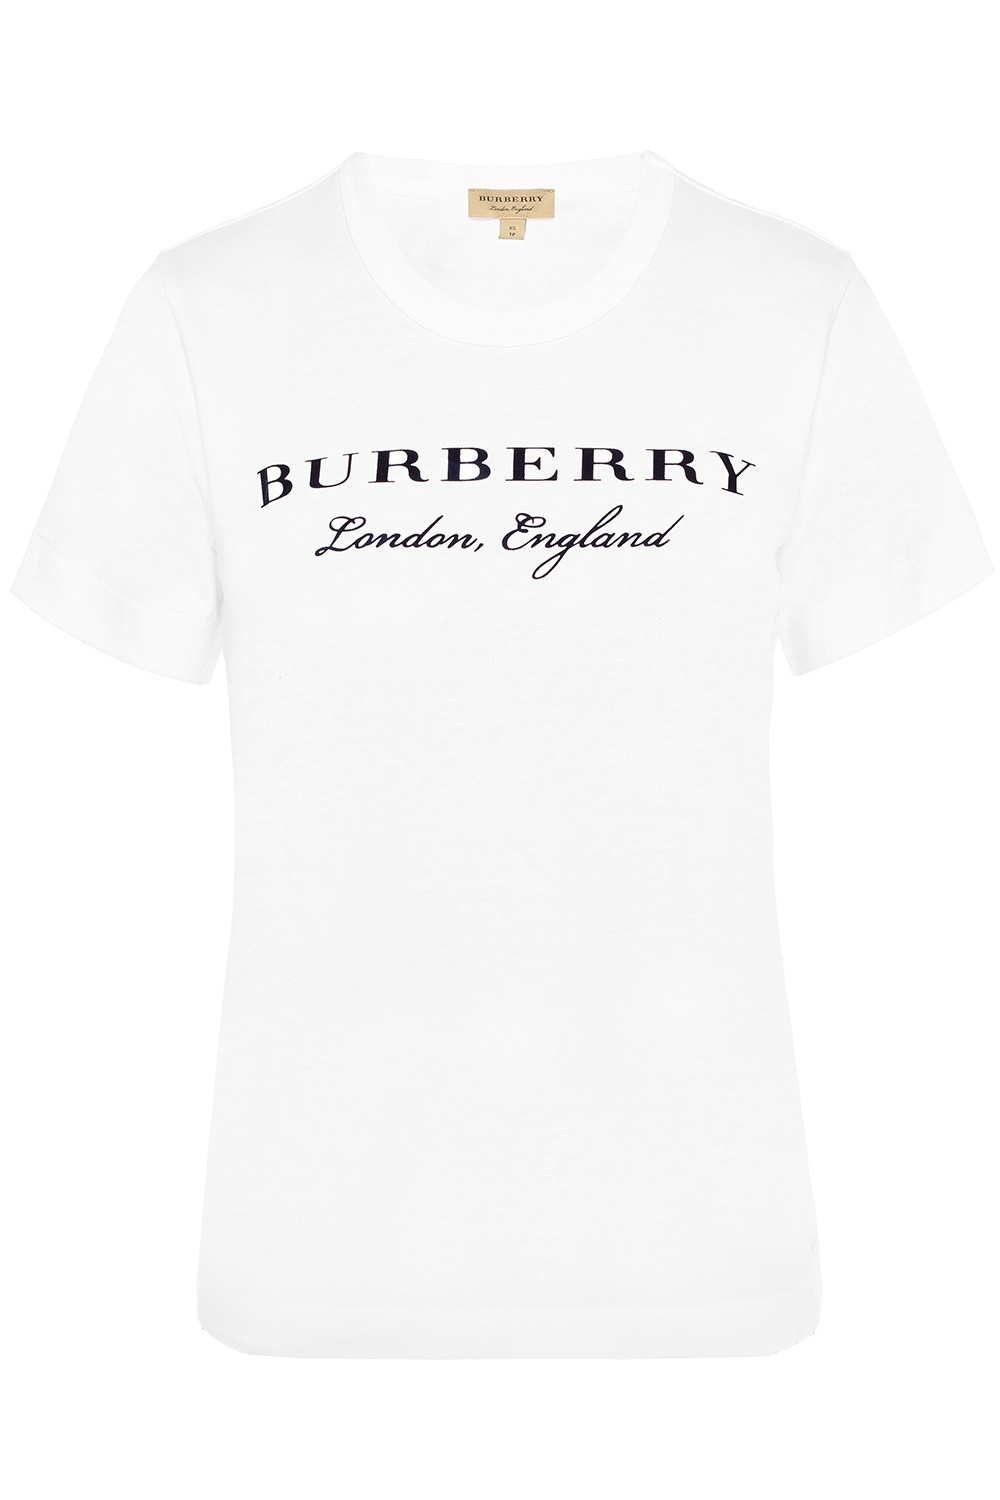 burberry t shirt canada